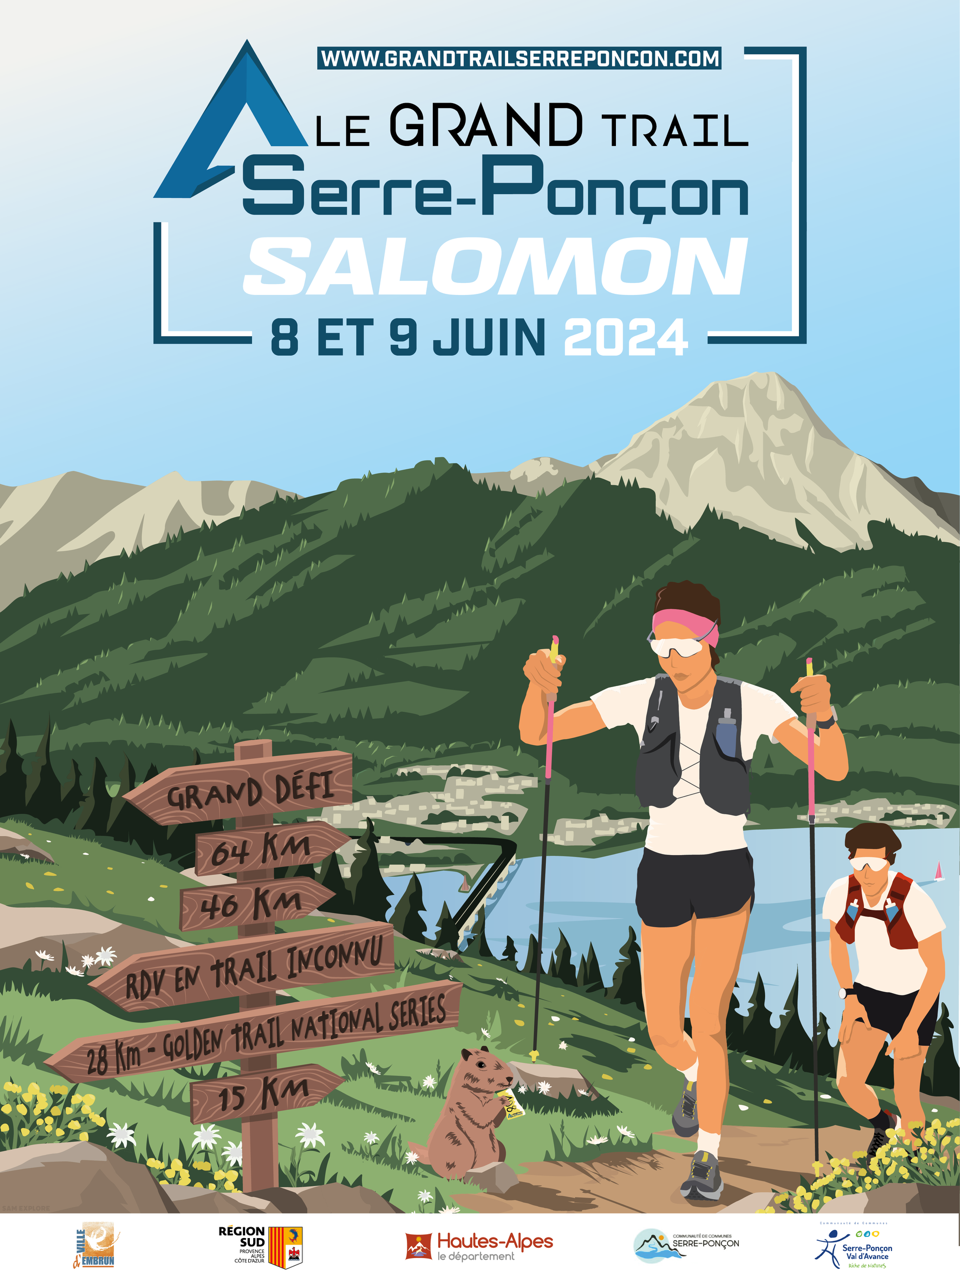 Groot pad van Serre-Ponçon